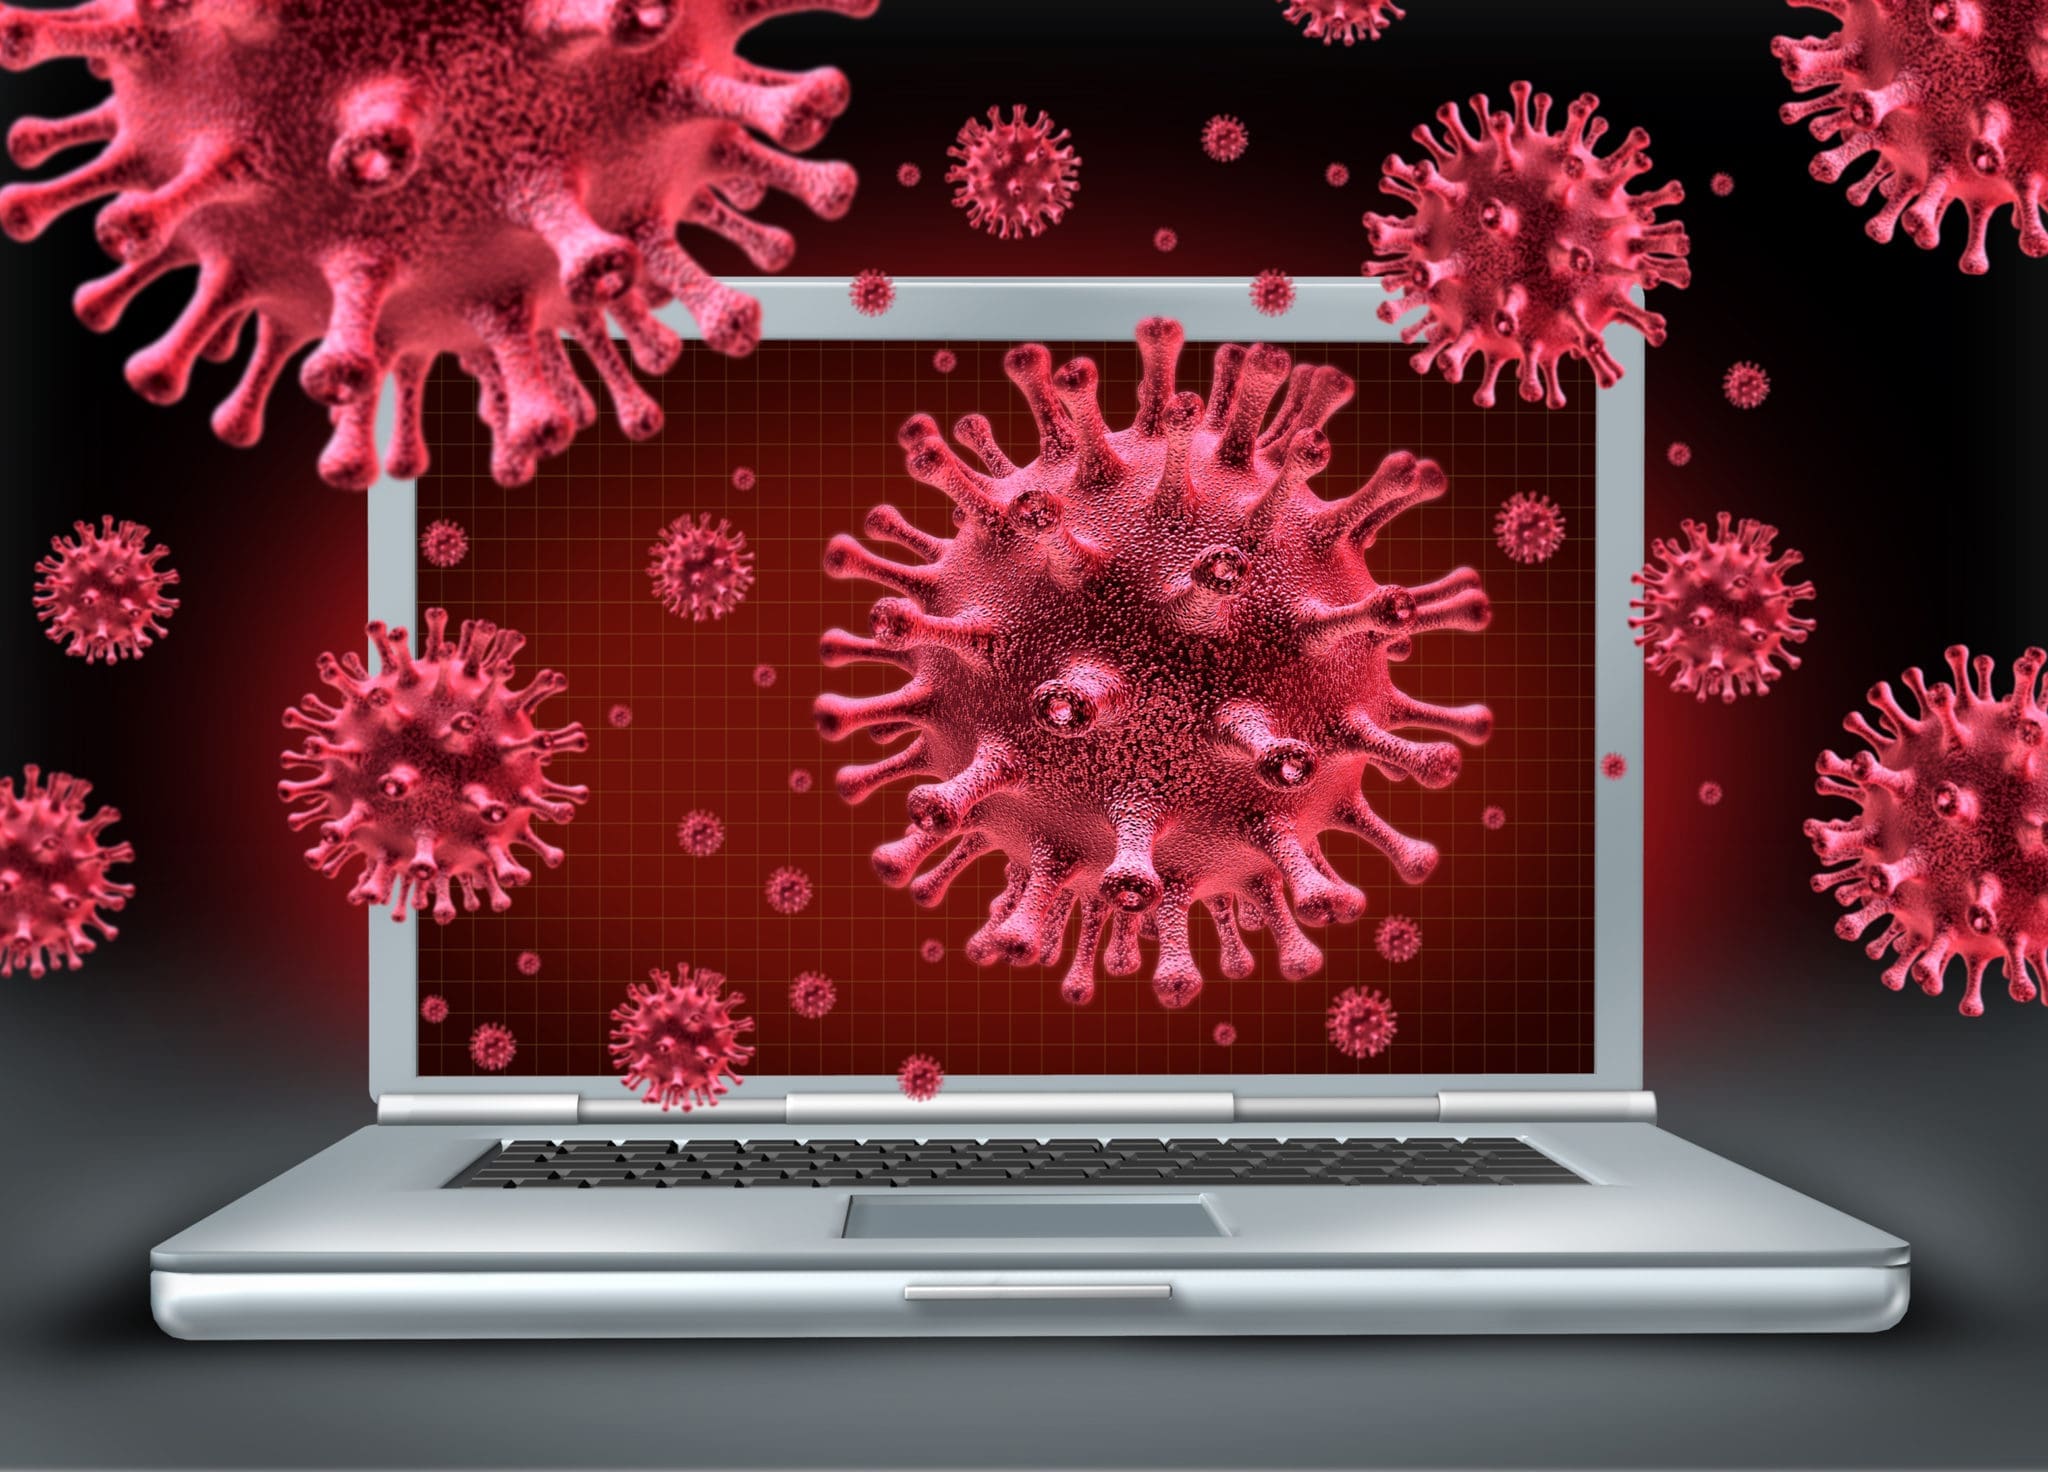 Virus pc. Компьютерные вирусы. Вирус ПК. Компьютерные вирусы картинки. Вирусы в интернете.